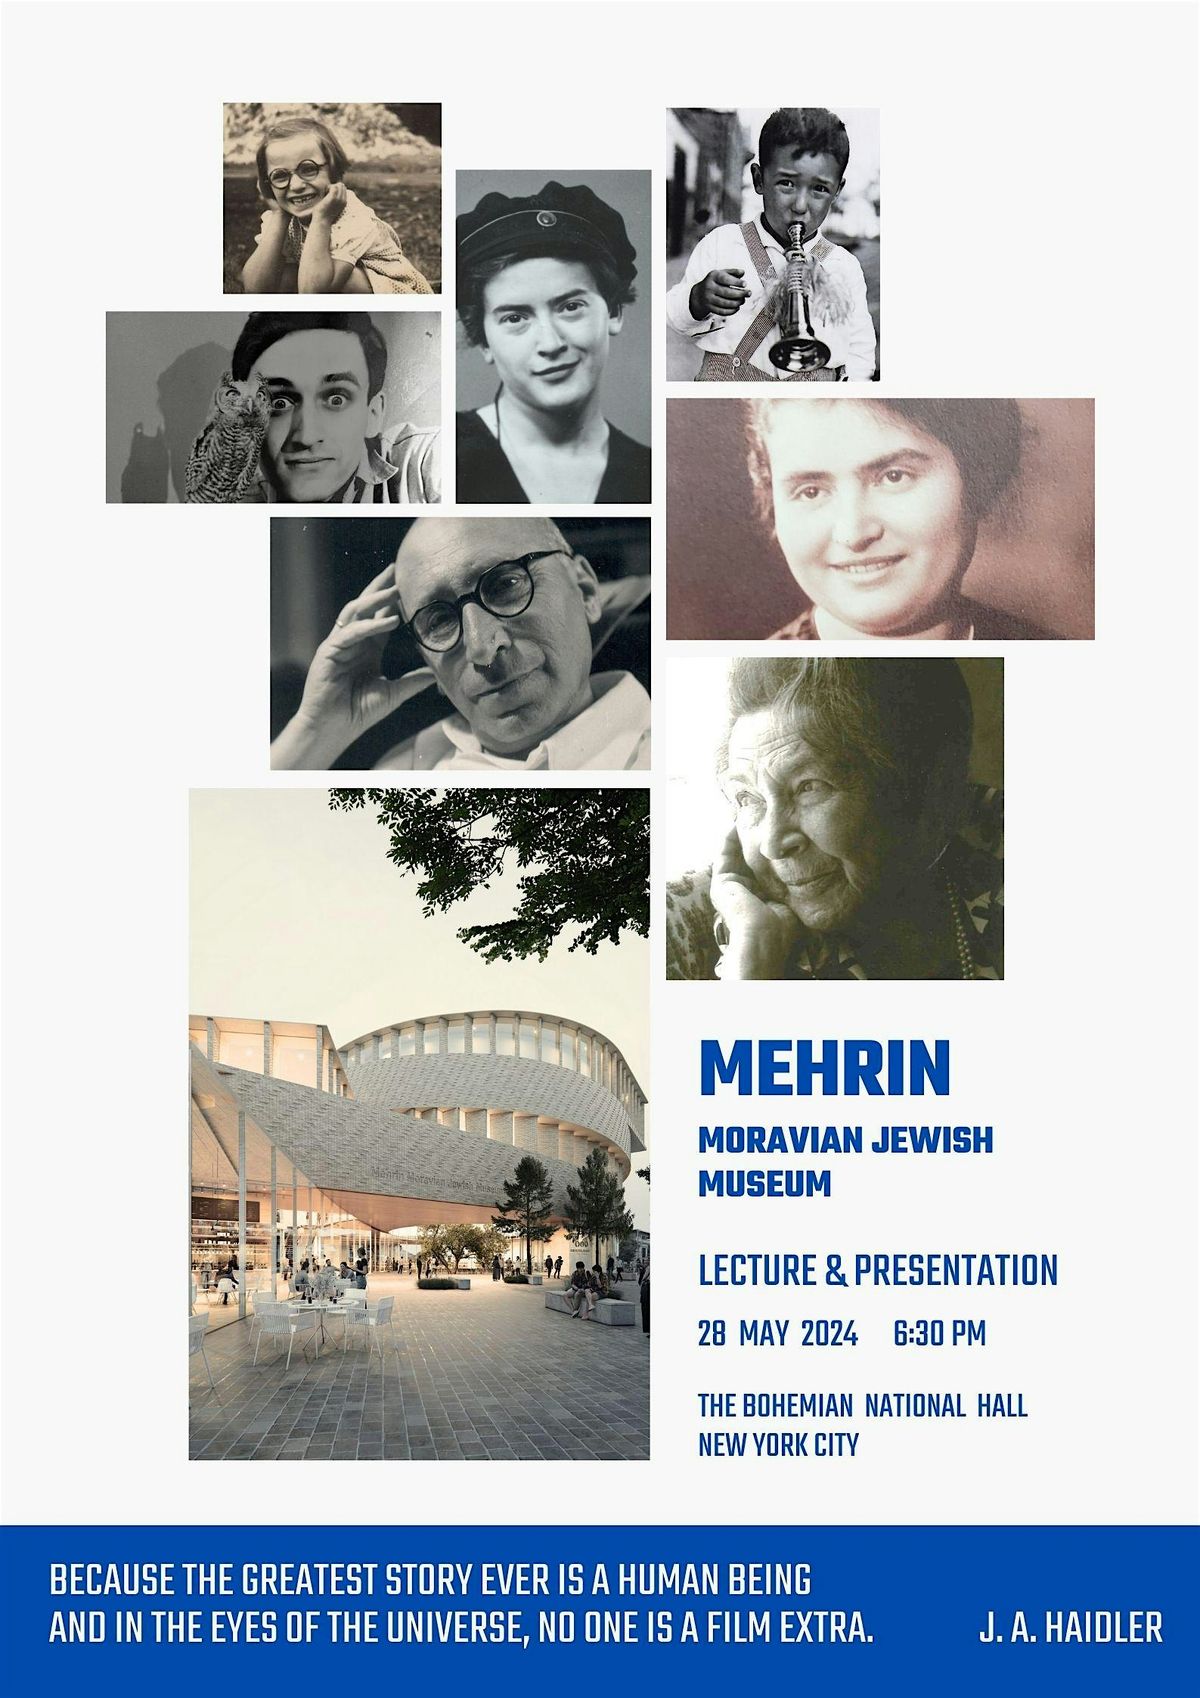 MEHRIN: MORAVIA AS A MELTING POT OF EUROPEAN JEWS